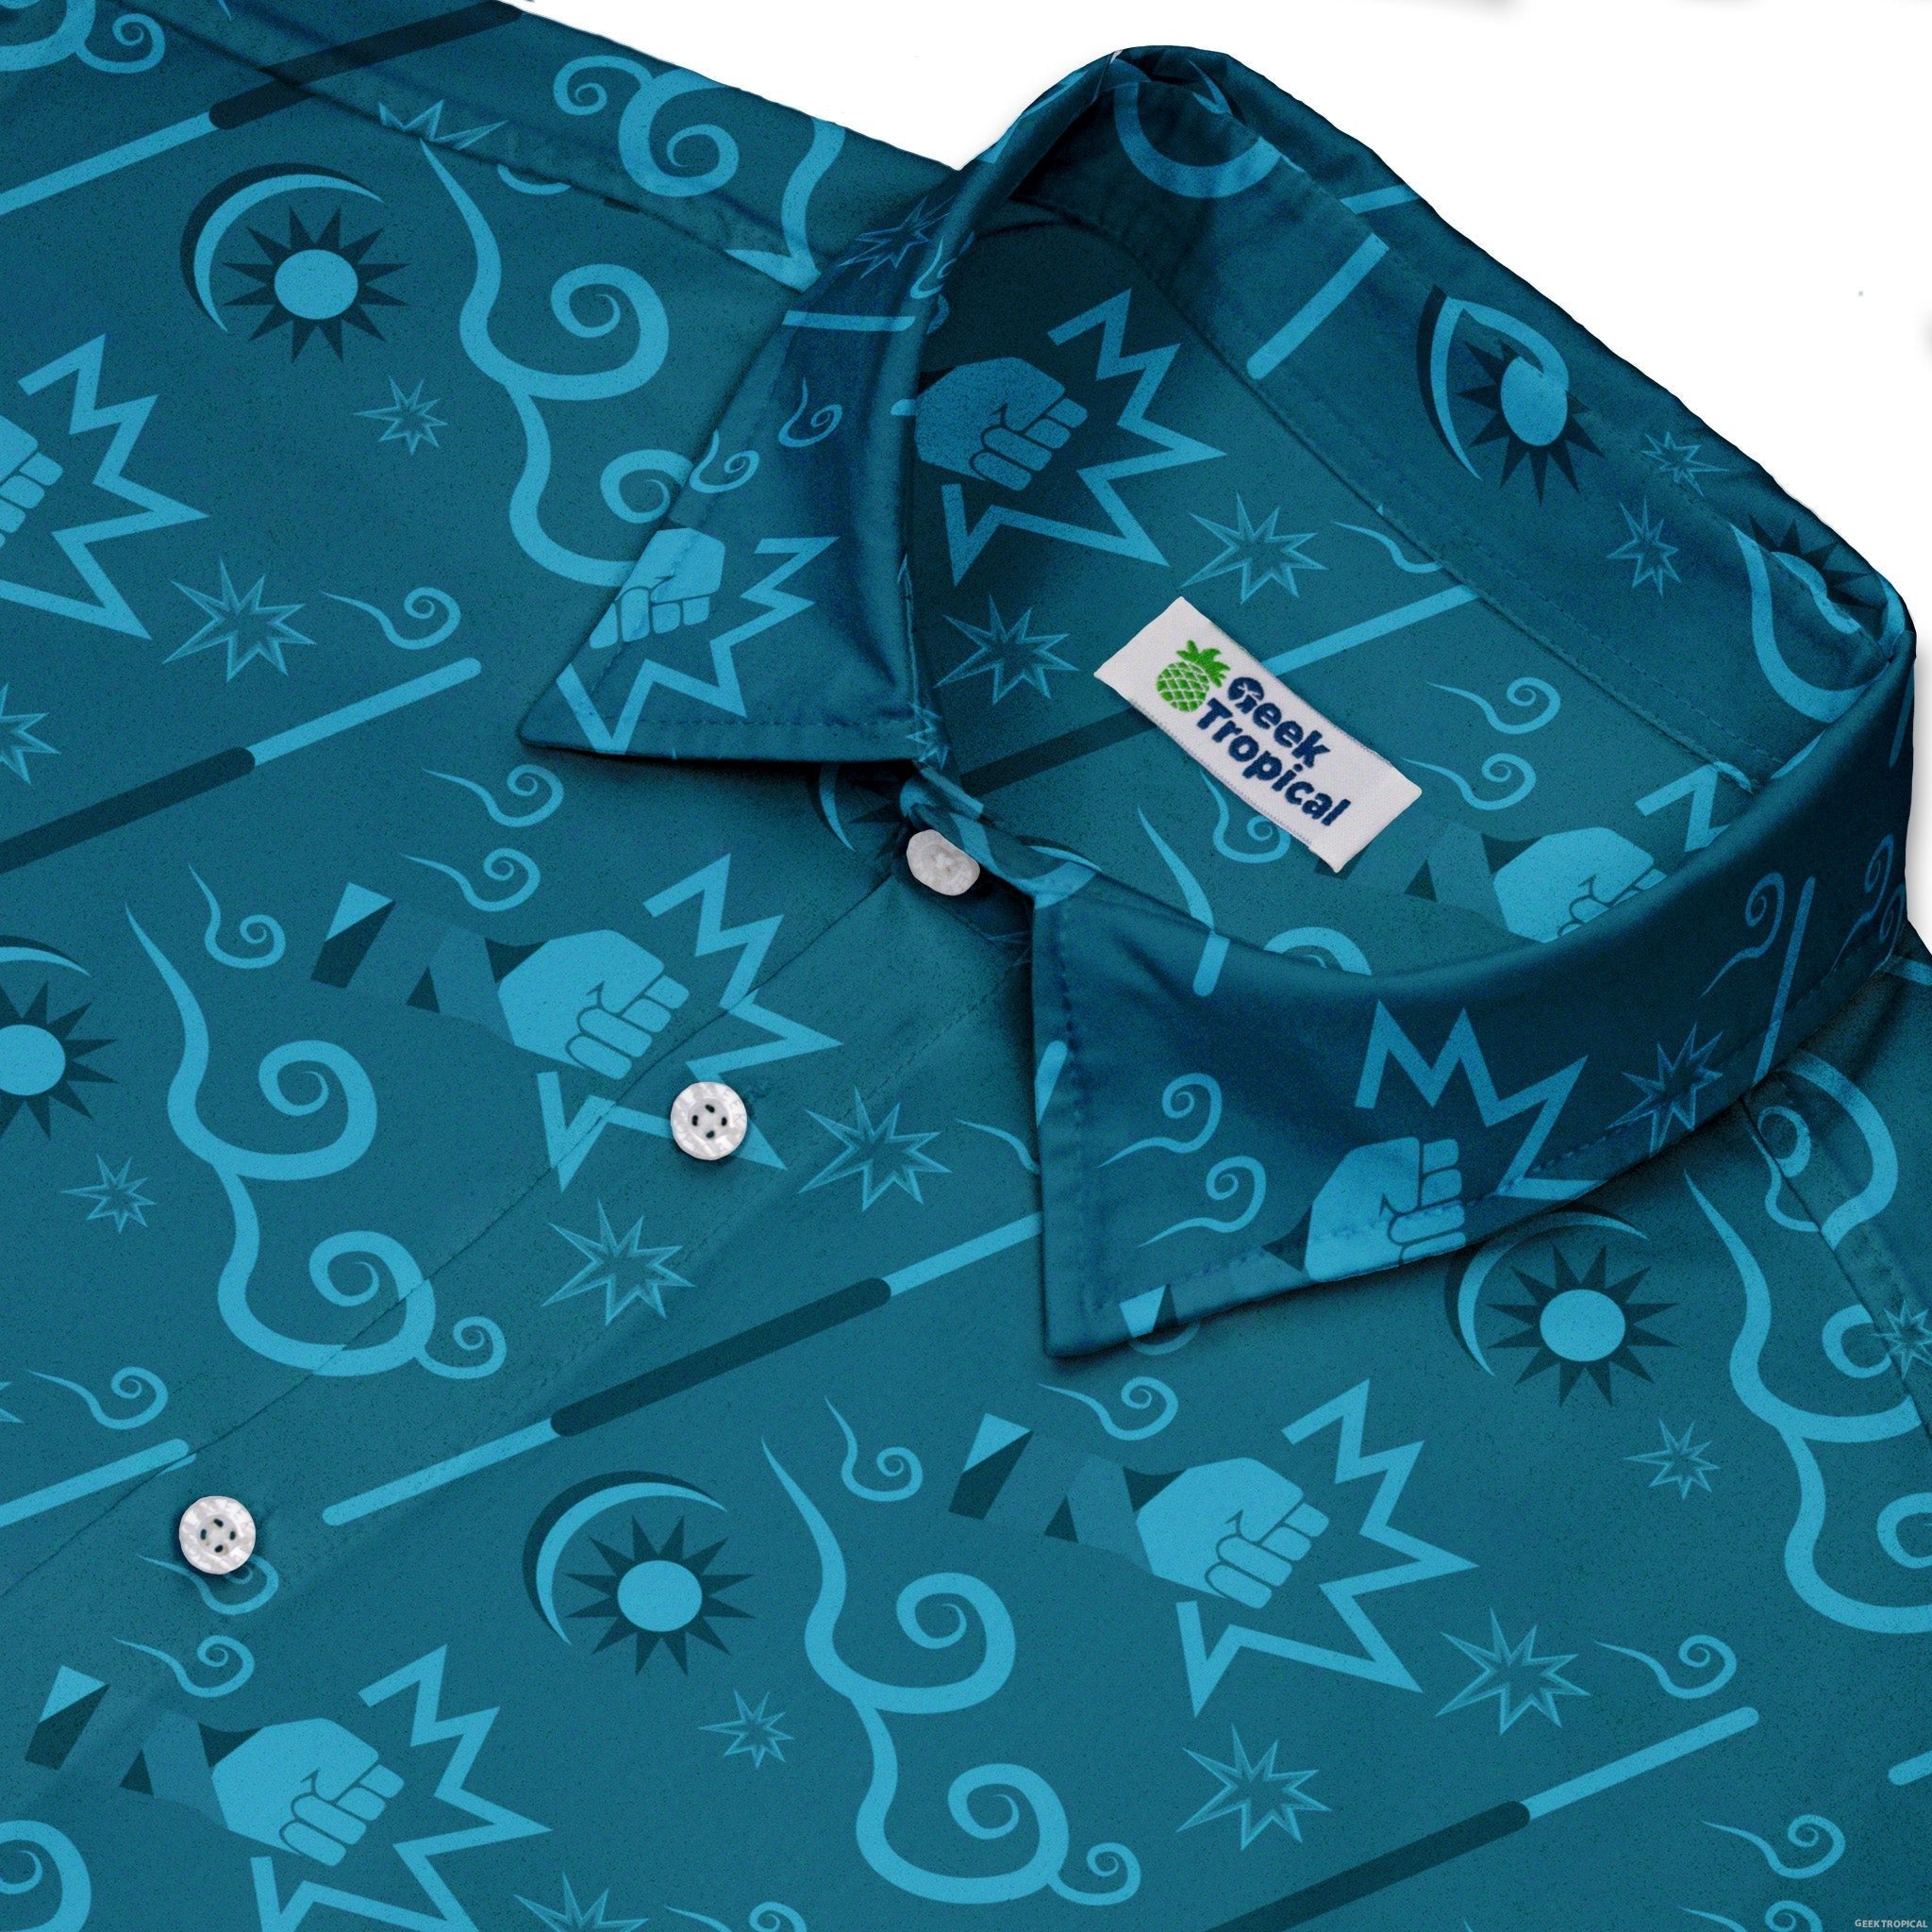 Dnd Monk Class Button Up Shirt - adult sizing - Design by Heather Davenport - dnd & rpg print